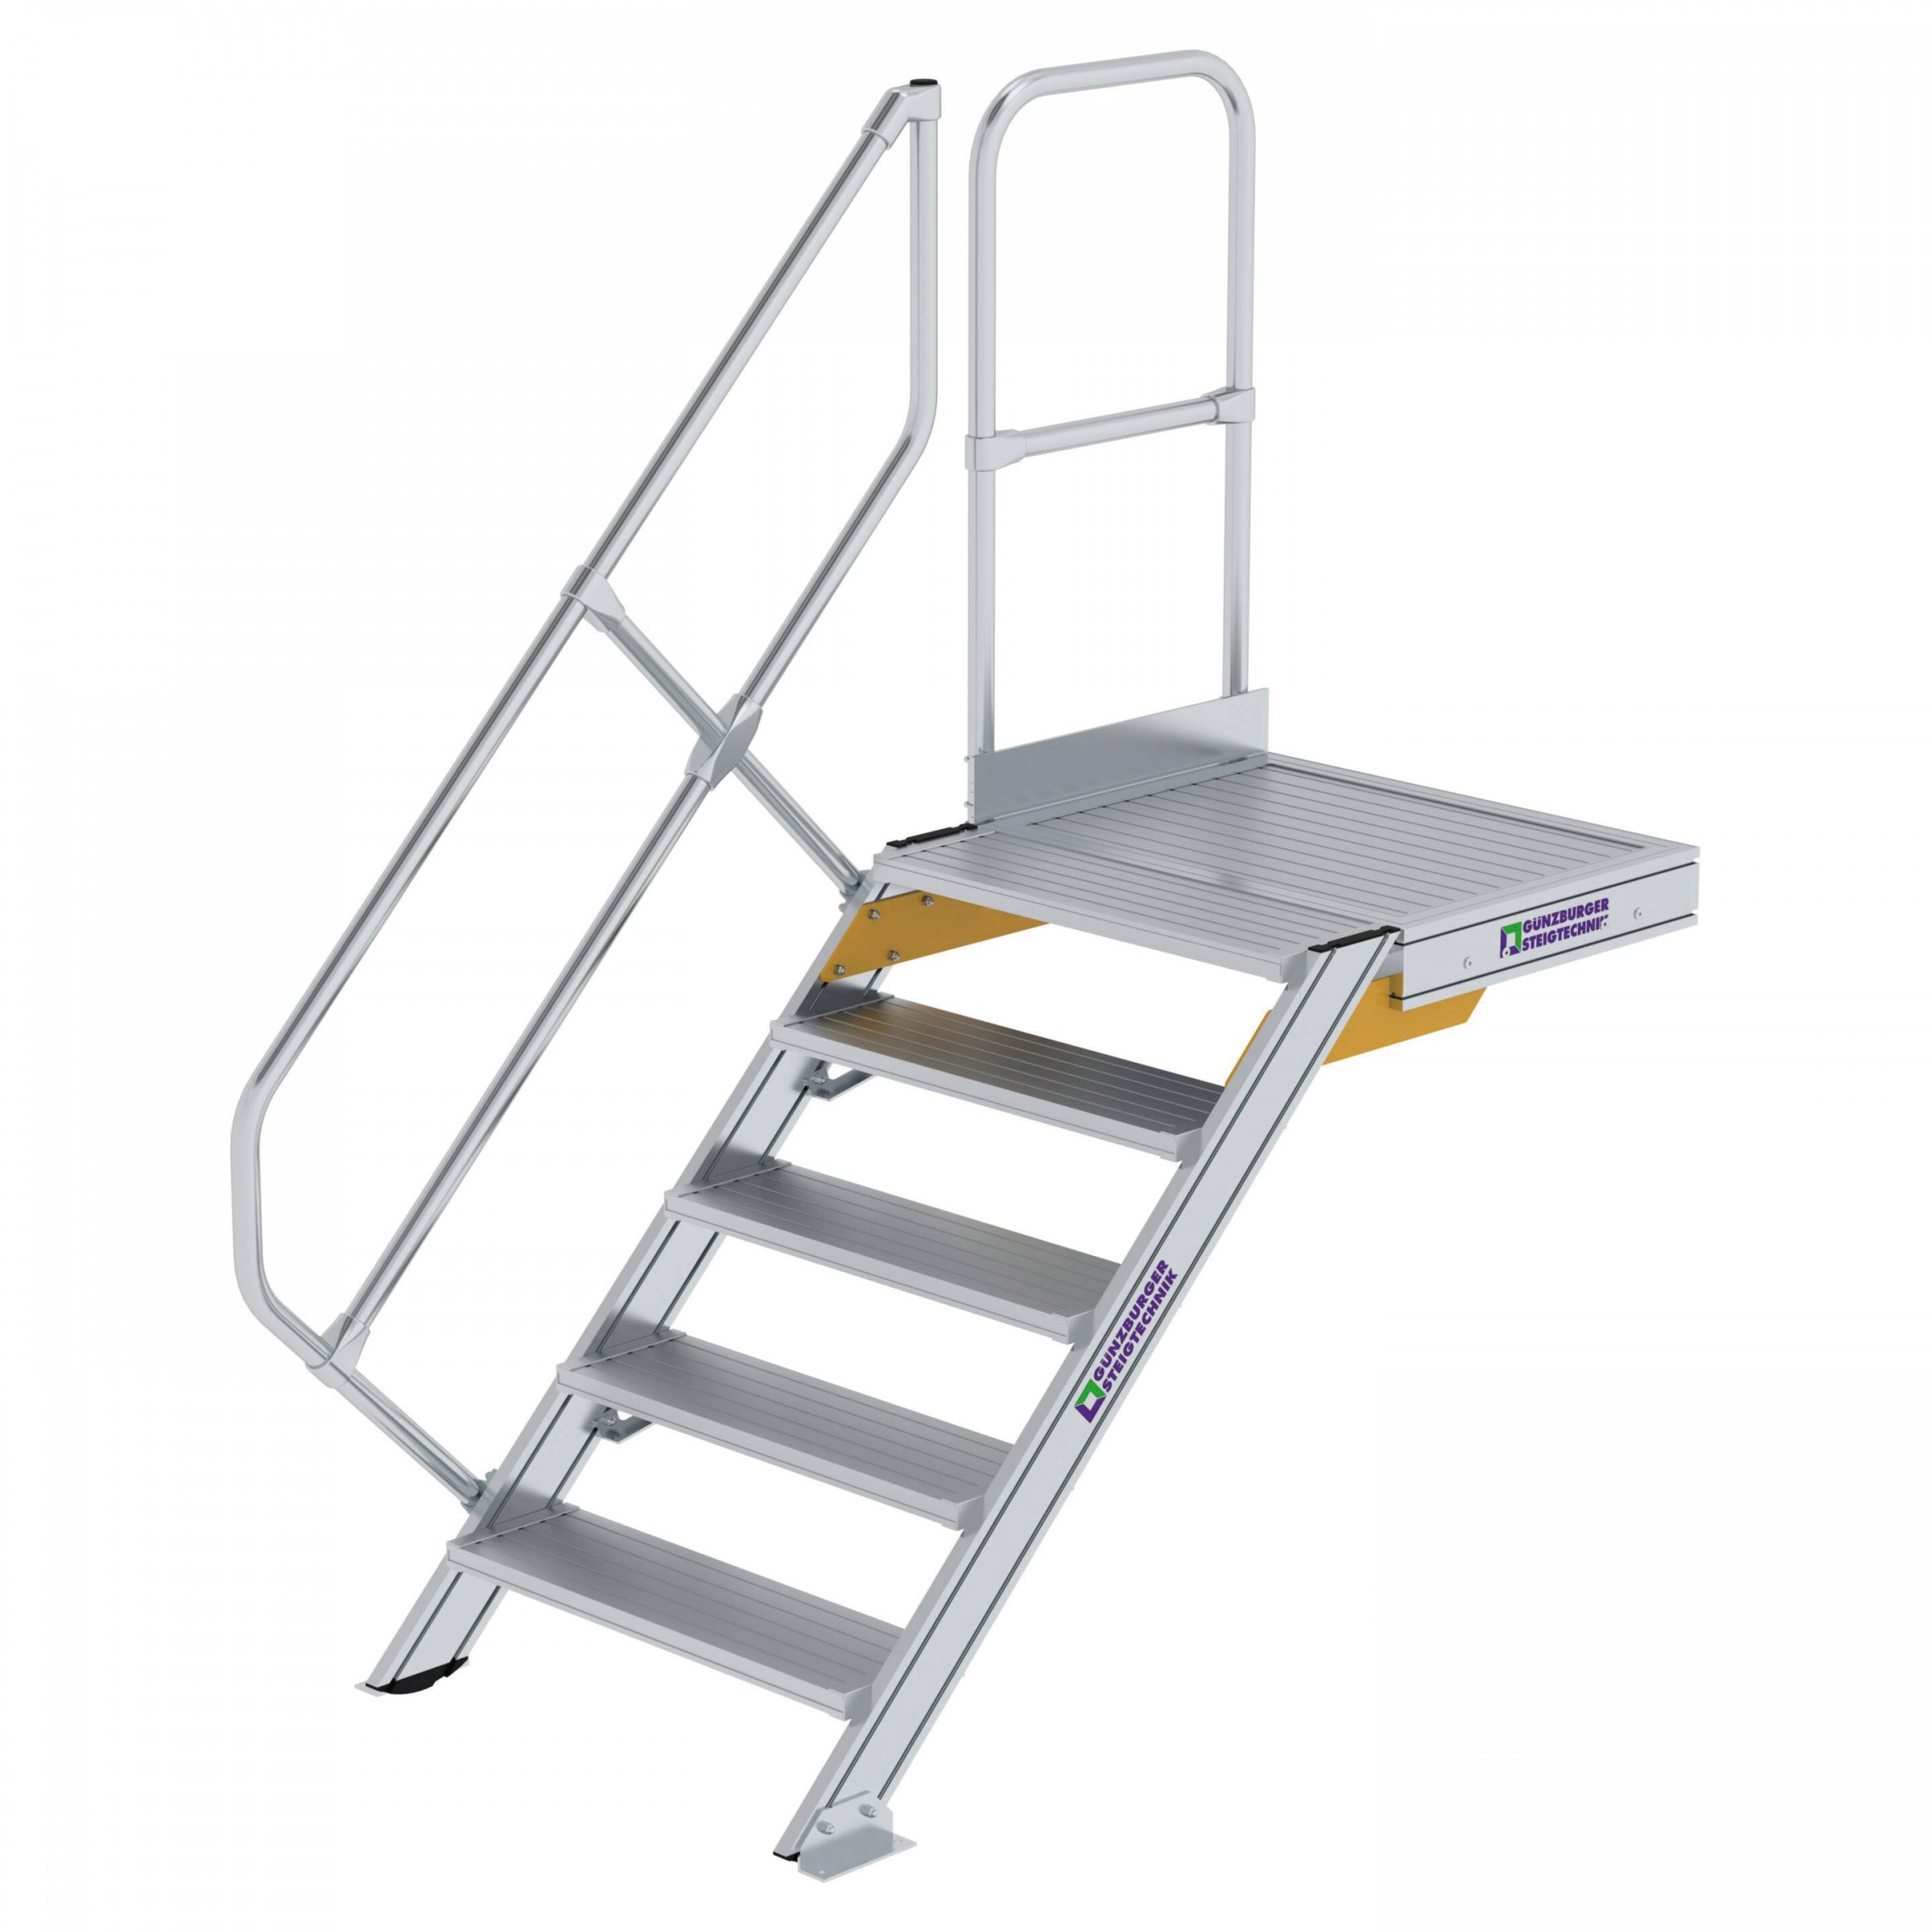 Aluminium-Treppe mit Plattform, 45°, Stufenbreite 800 mm, 10 Stufen